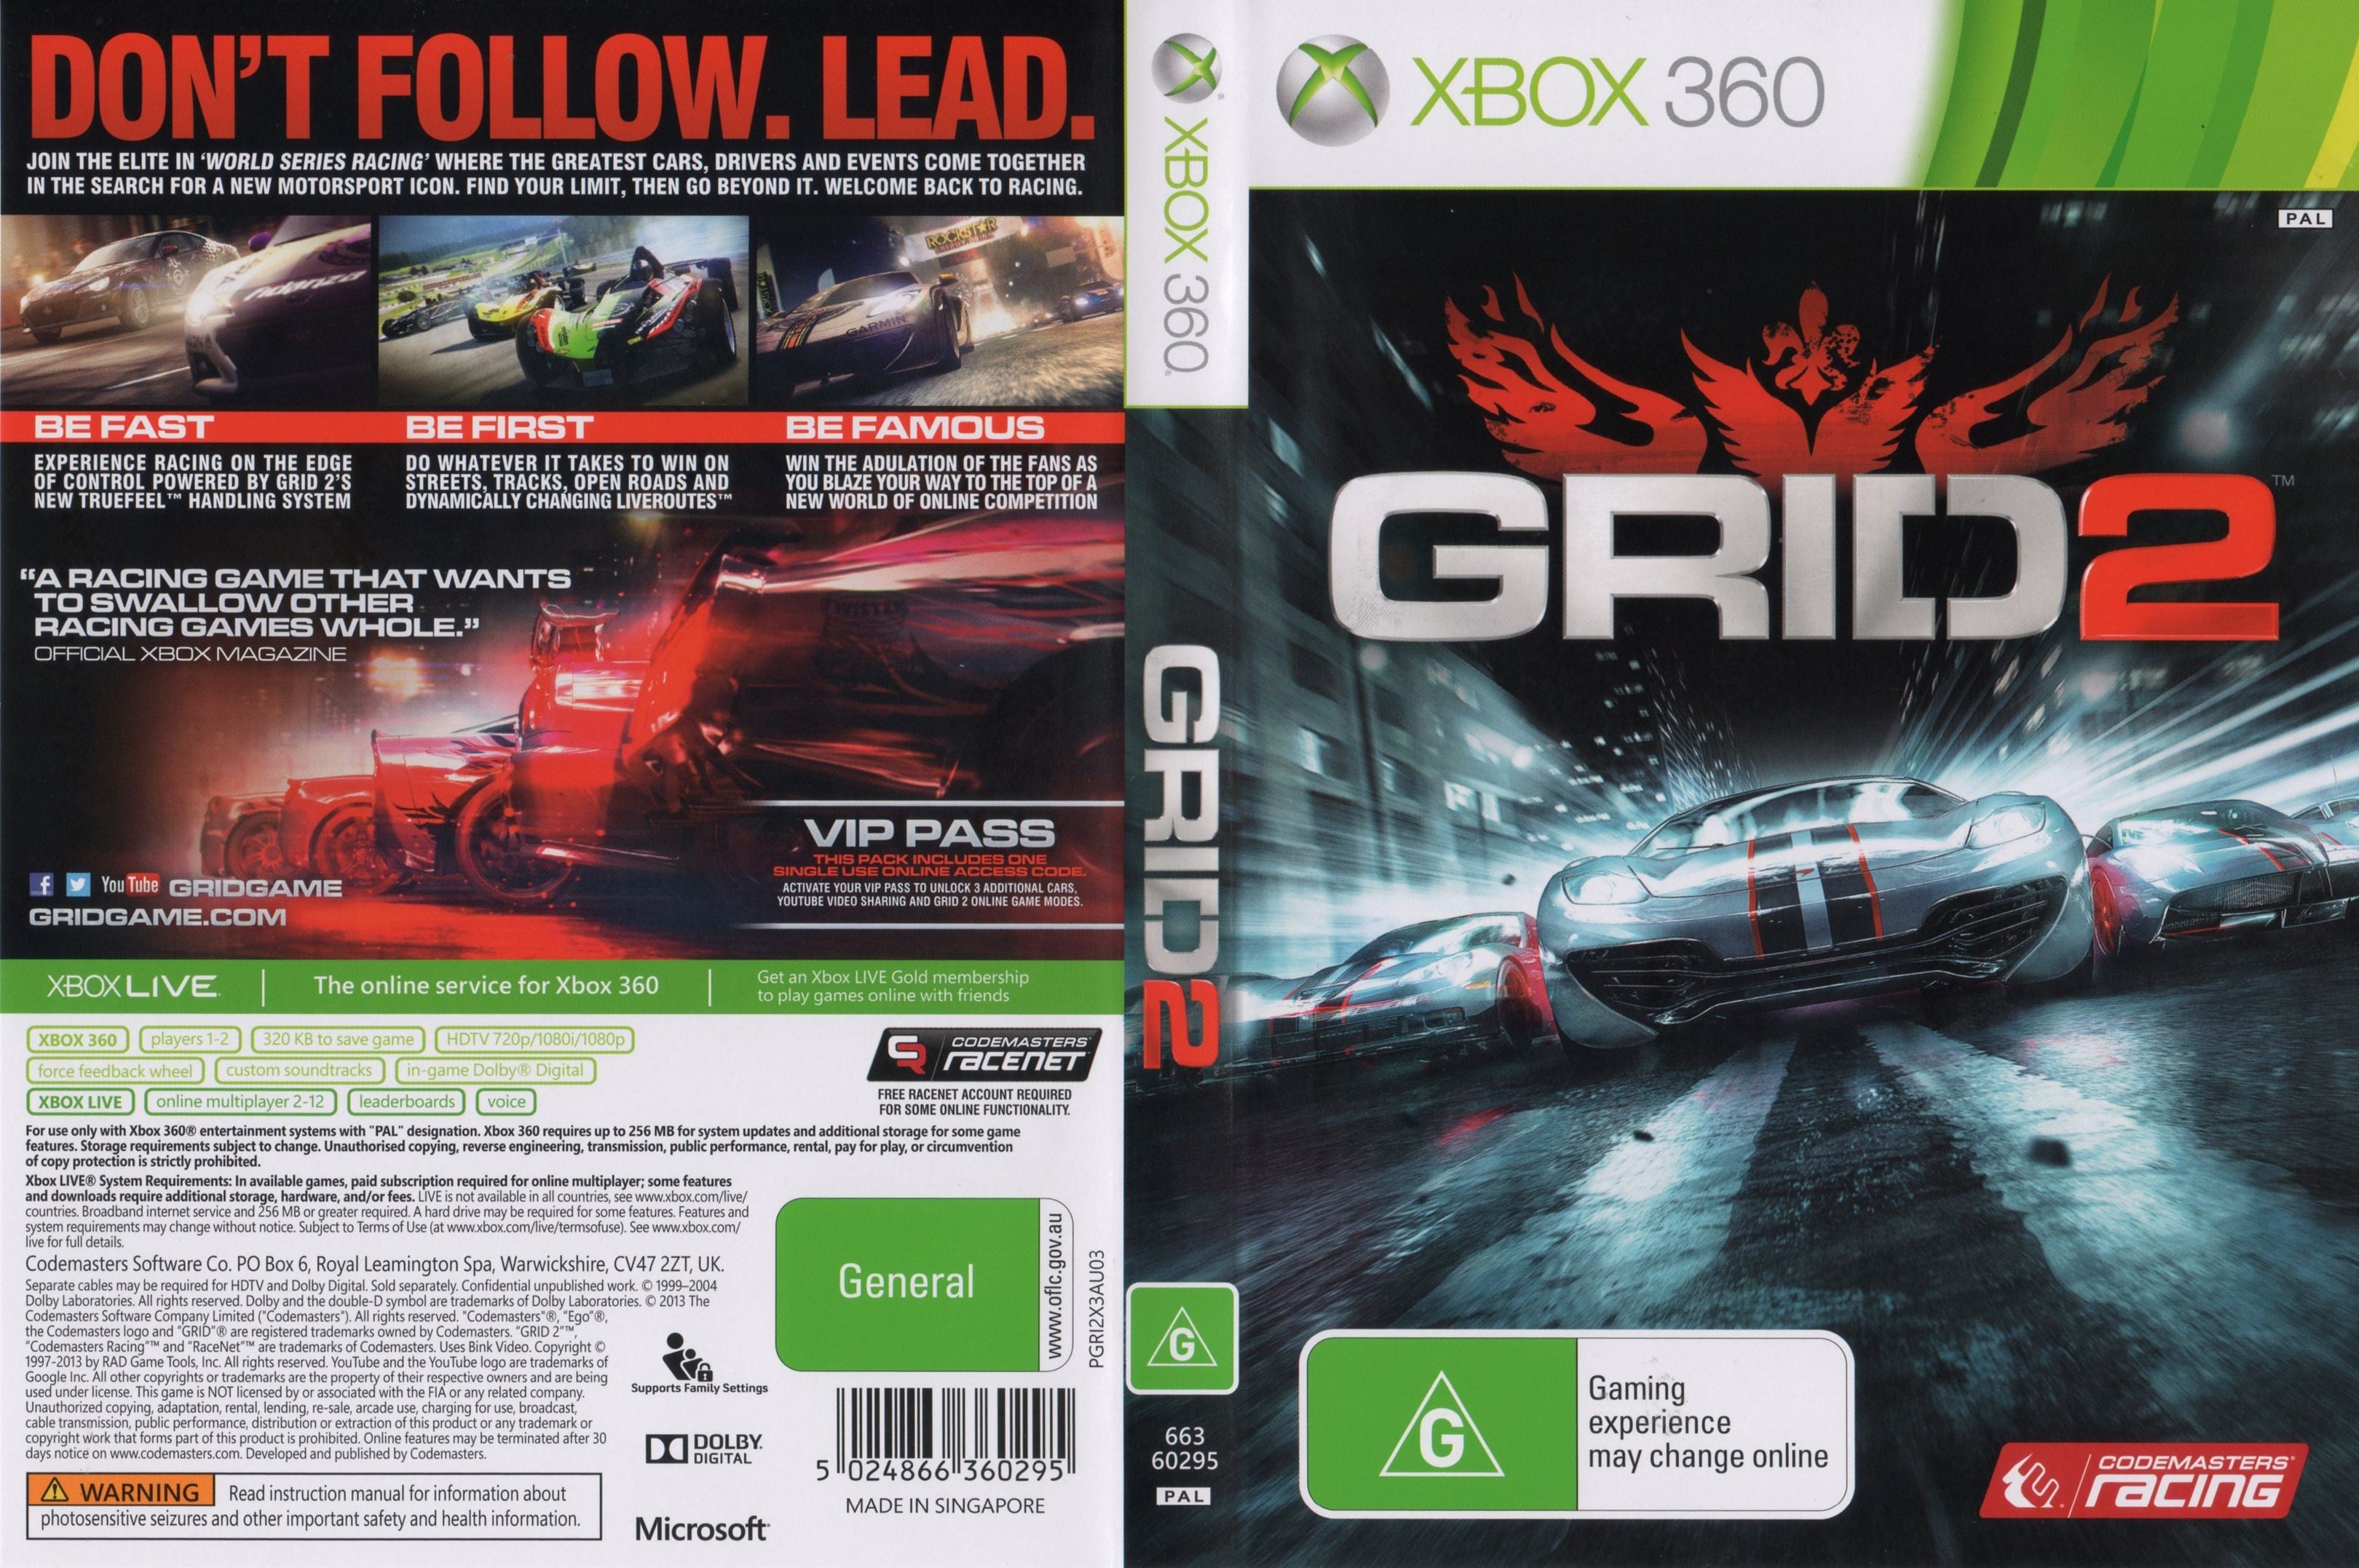 Xgd2 Games, Xbox 360 Games